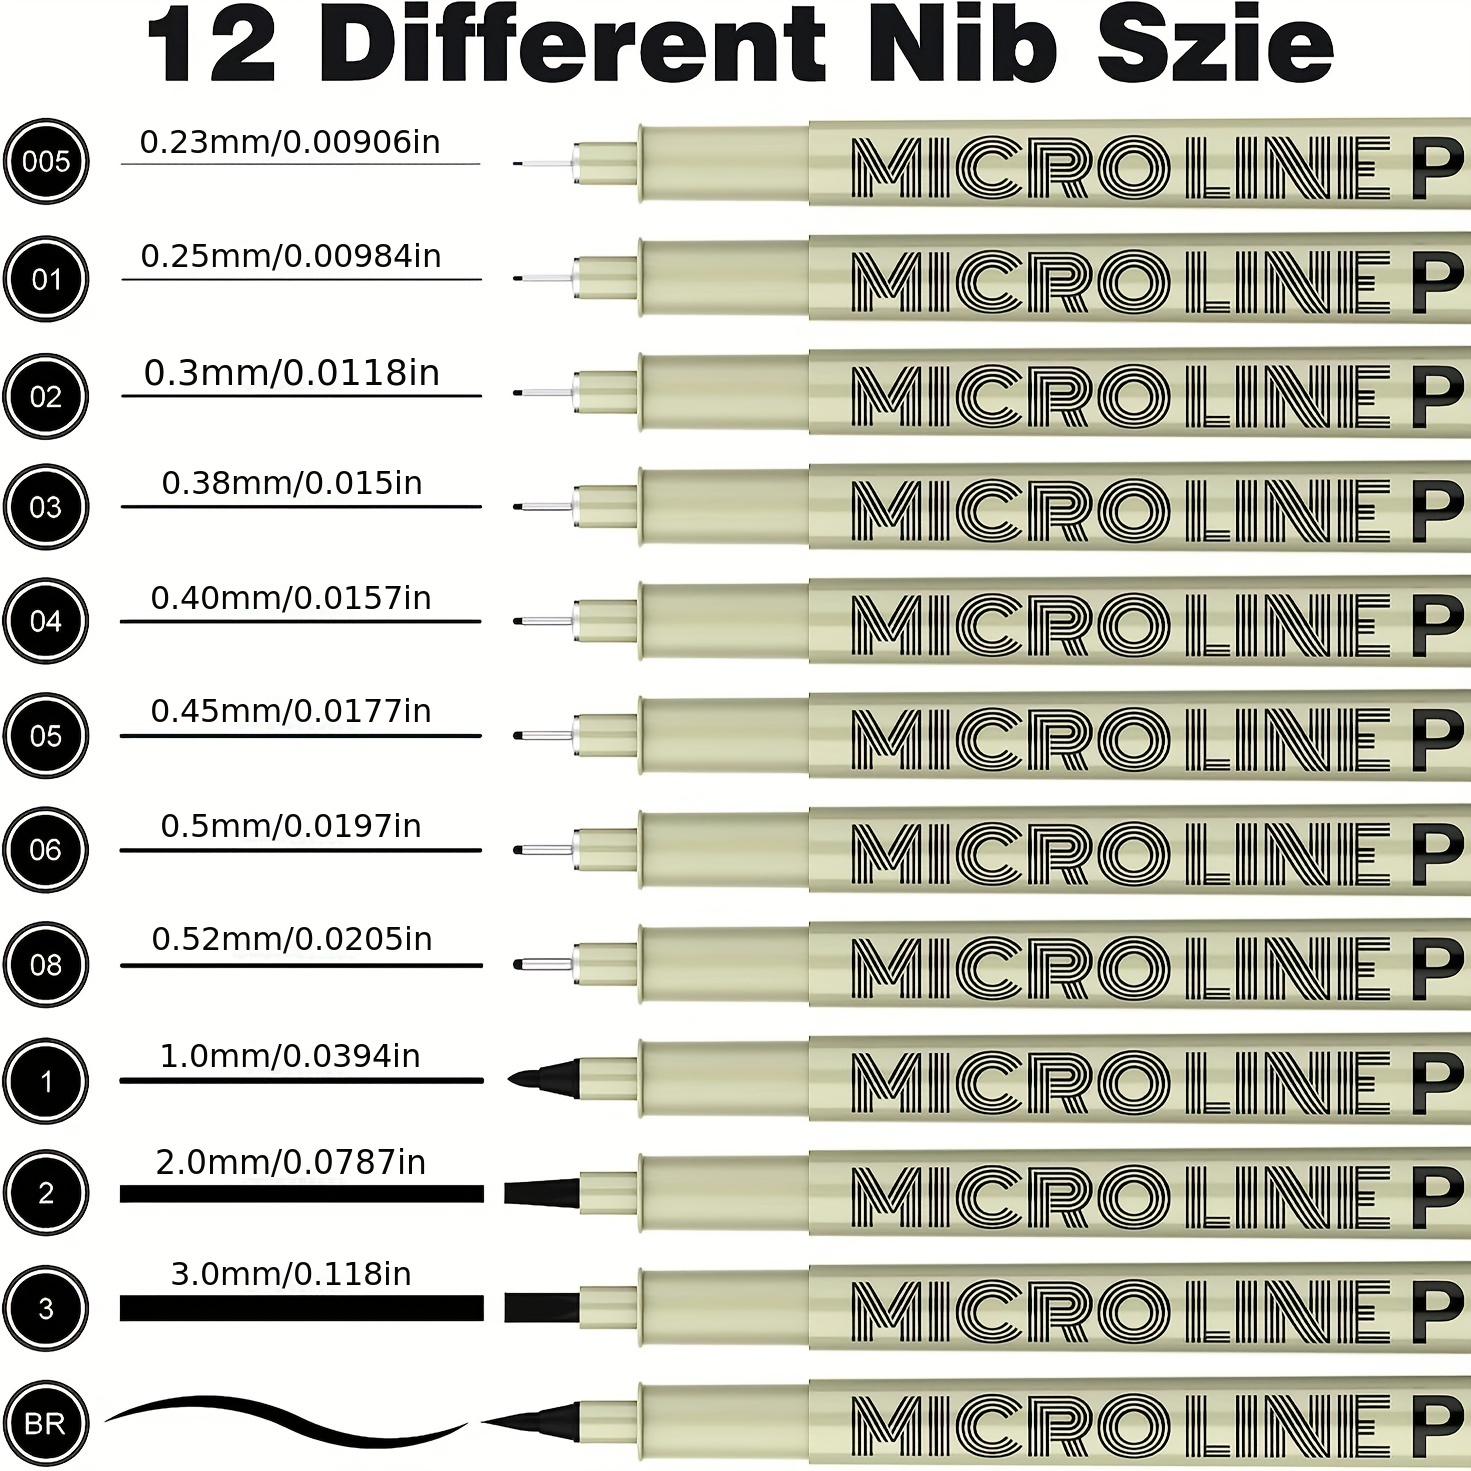 12pcs/set Micro-Pen Fineliner Ink Pens, Black Micro Fine Point Drawing Pens  Waterproof Archival Ink Multiliner Pens For Artist Illustration, Sketching